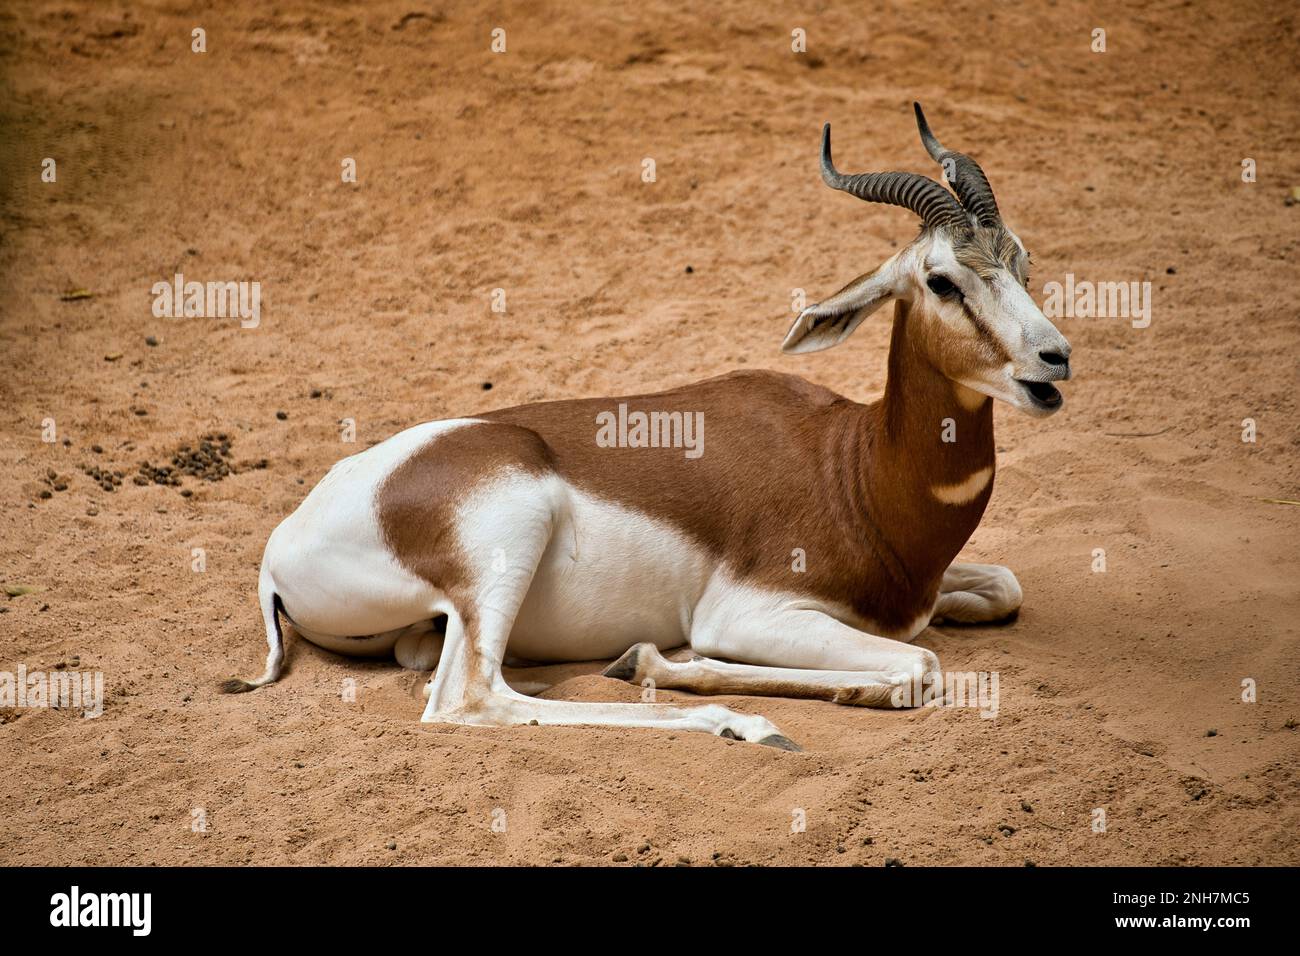 Full body shot of an antelope lying on a sandy ground. Stock Photo